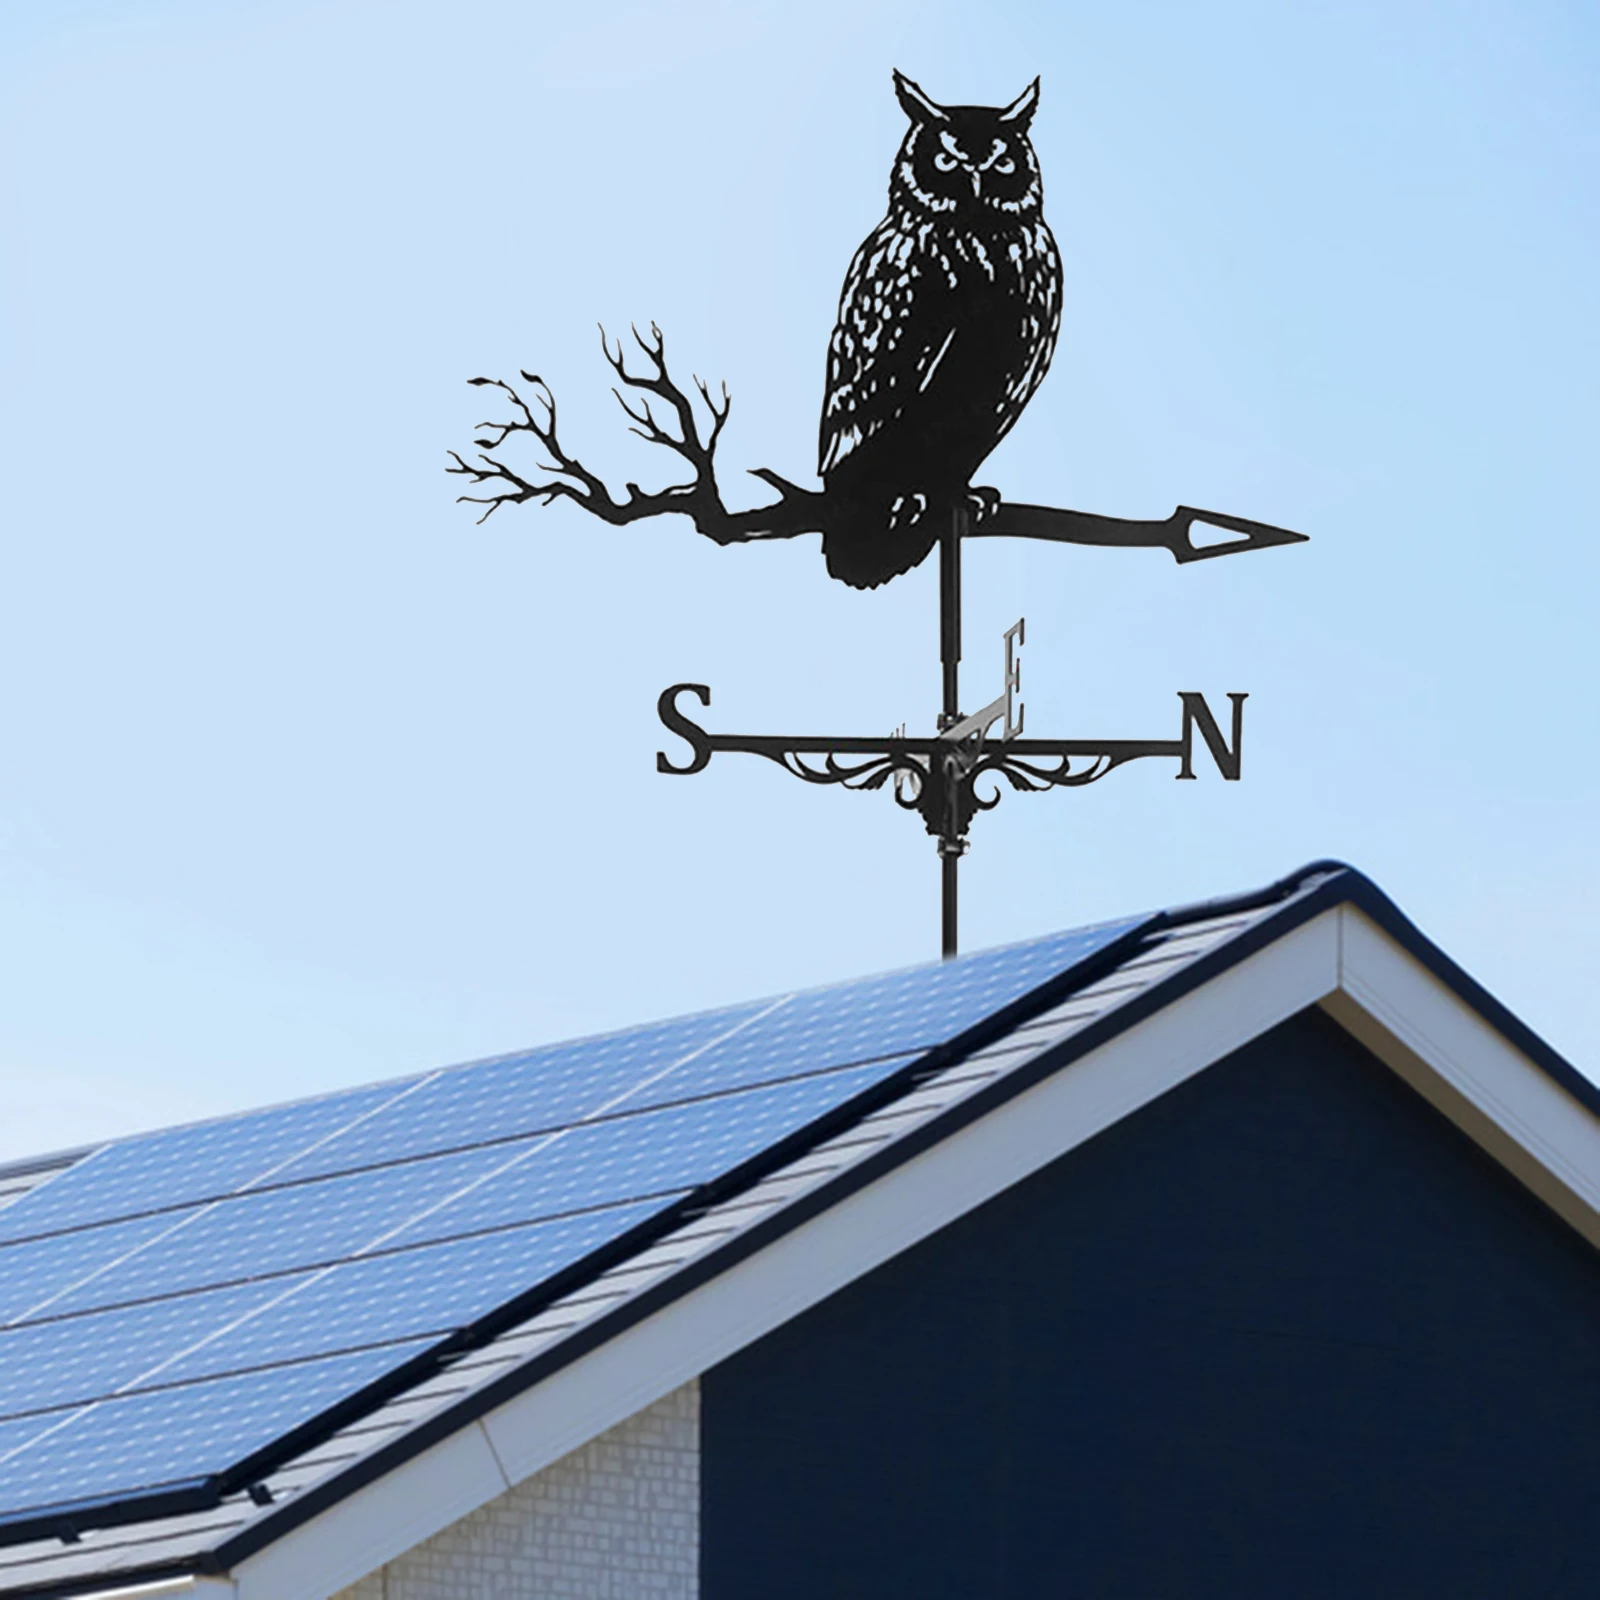 Practical Owl Weathervane Roof Mount Weather Vane Yard Farm 30inch Tall